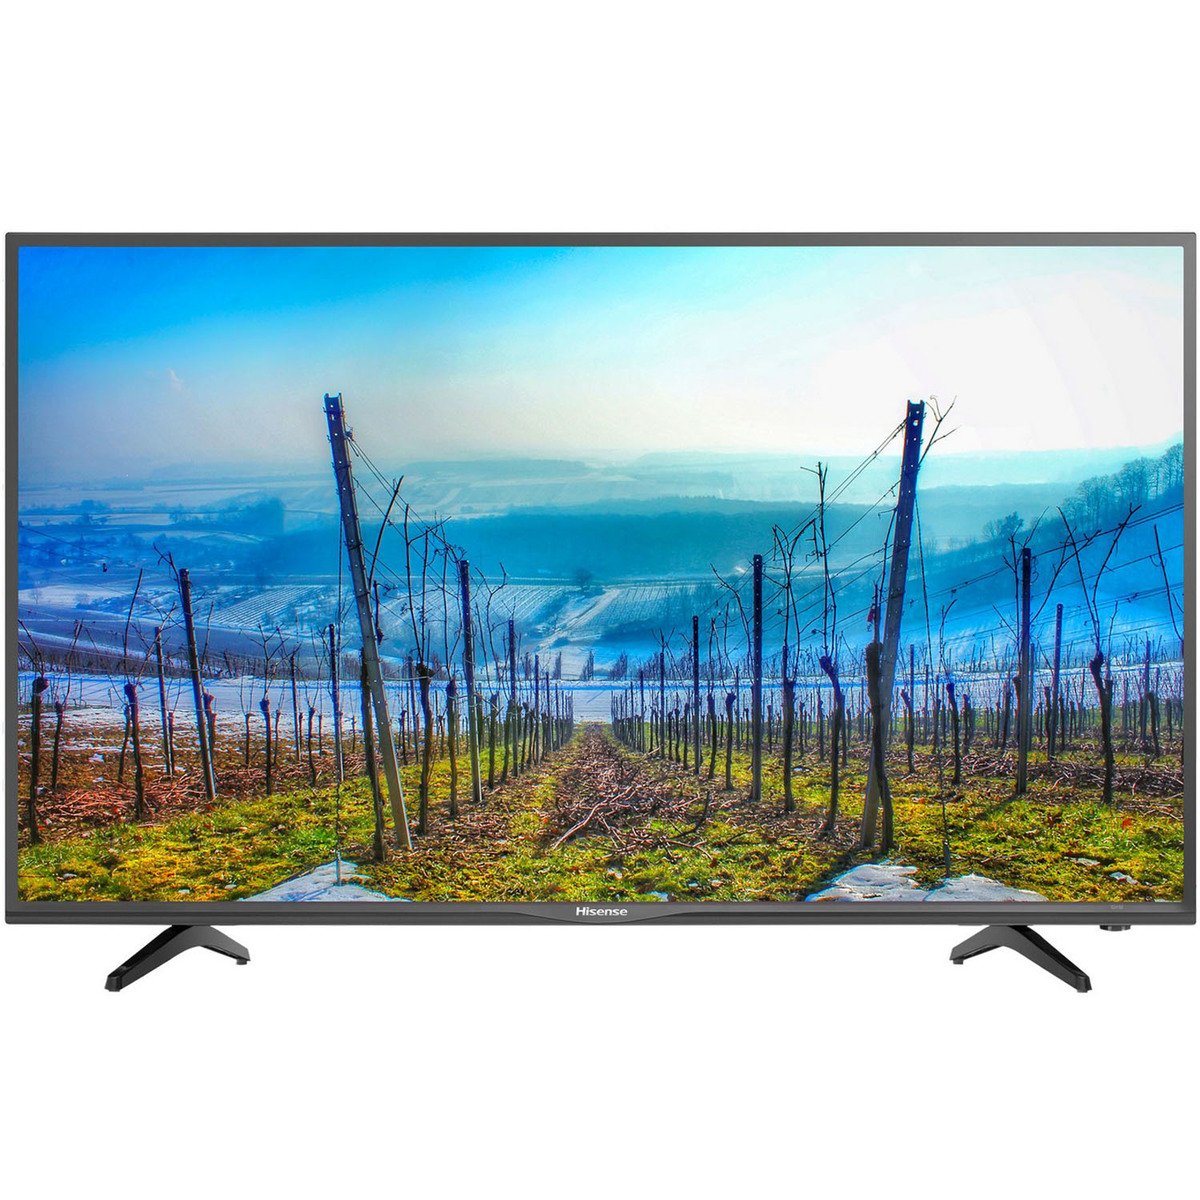 Hisense Full HD Smart LED TV 40N2182PW 40inch